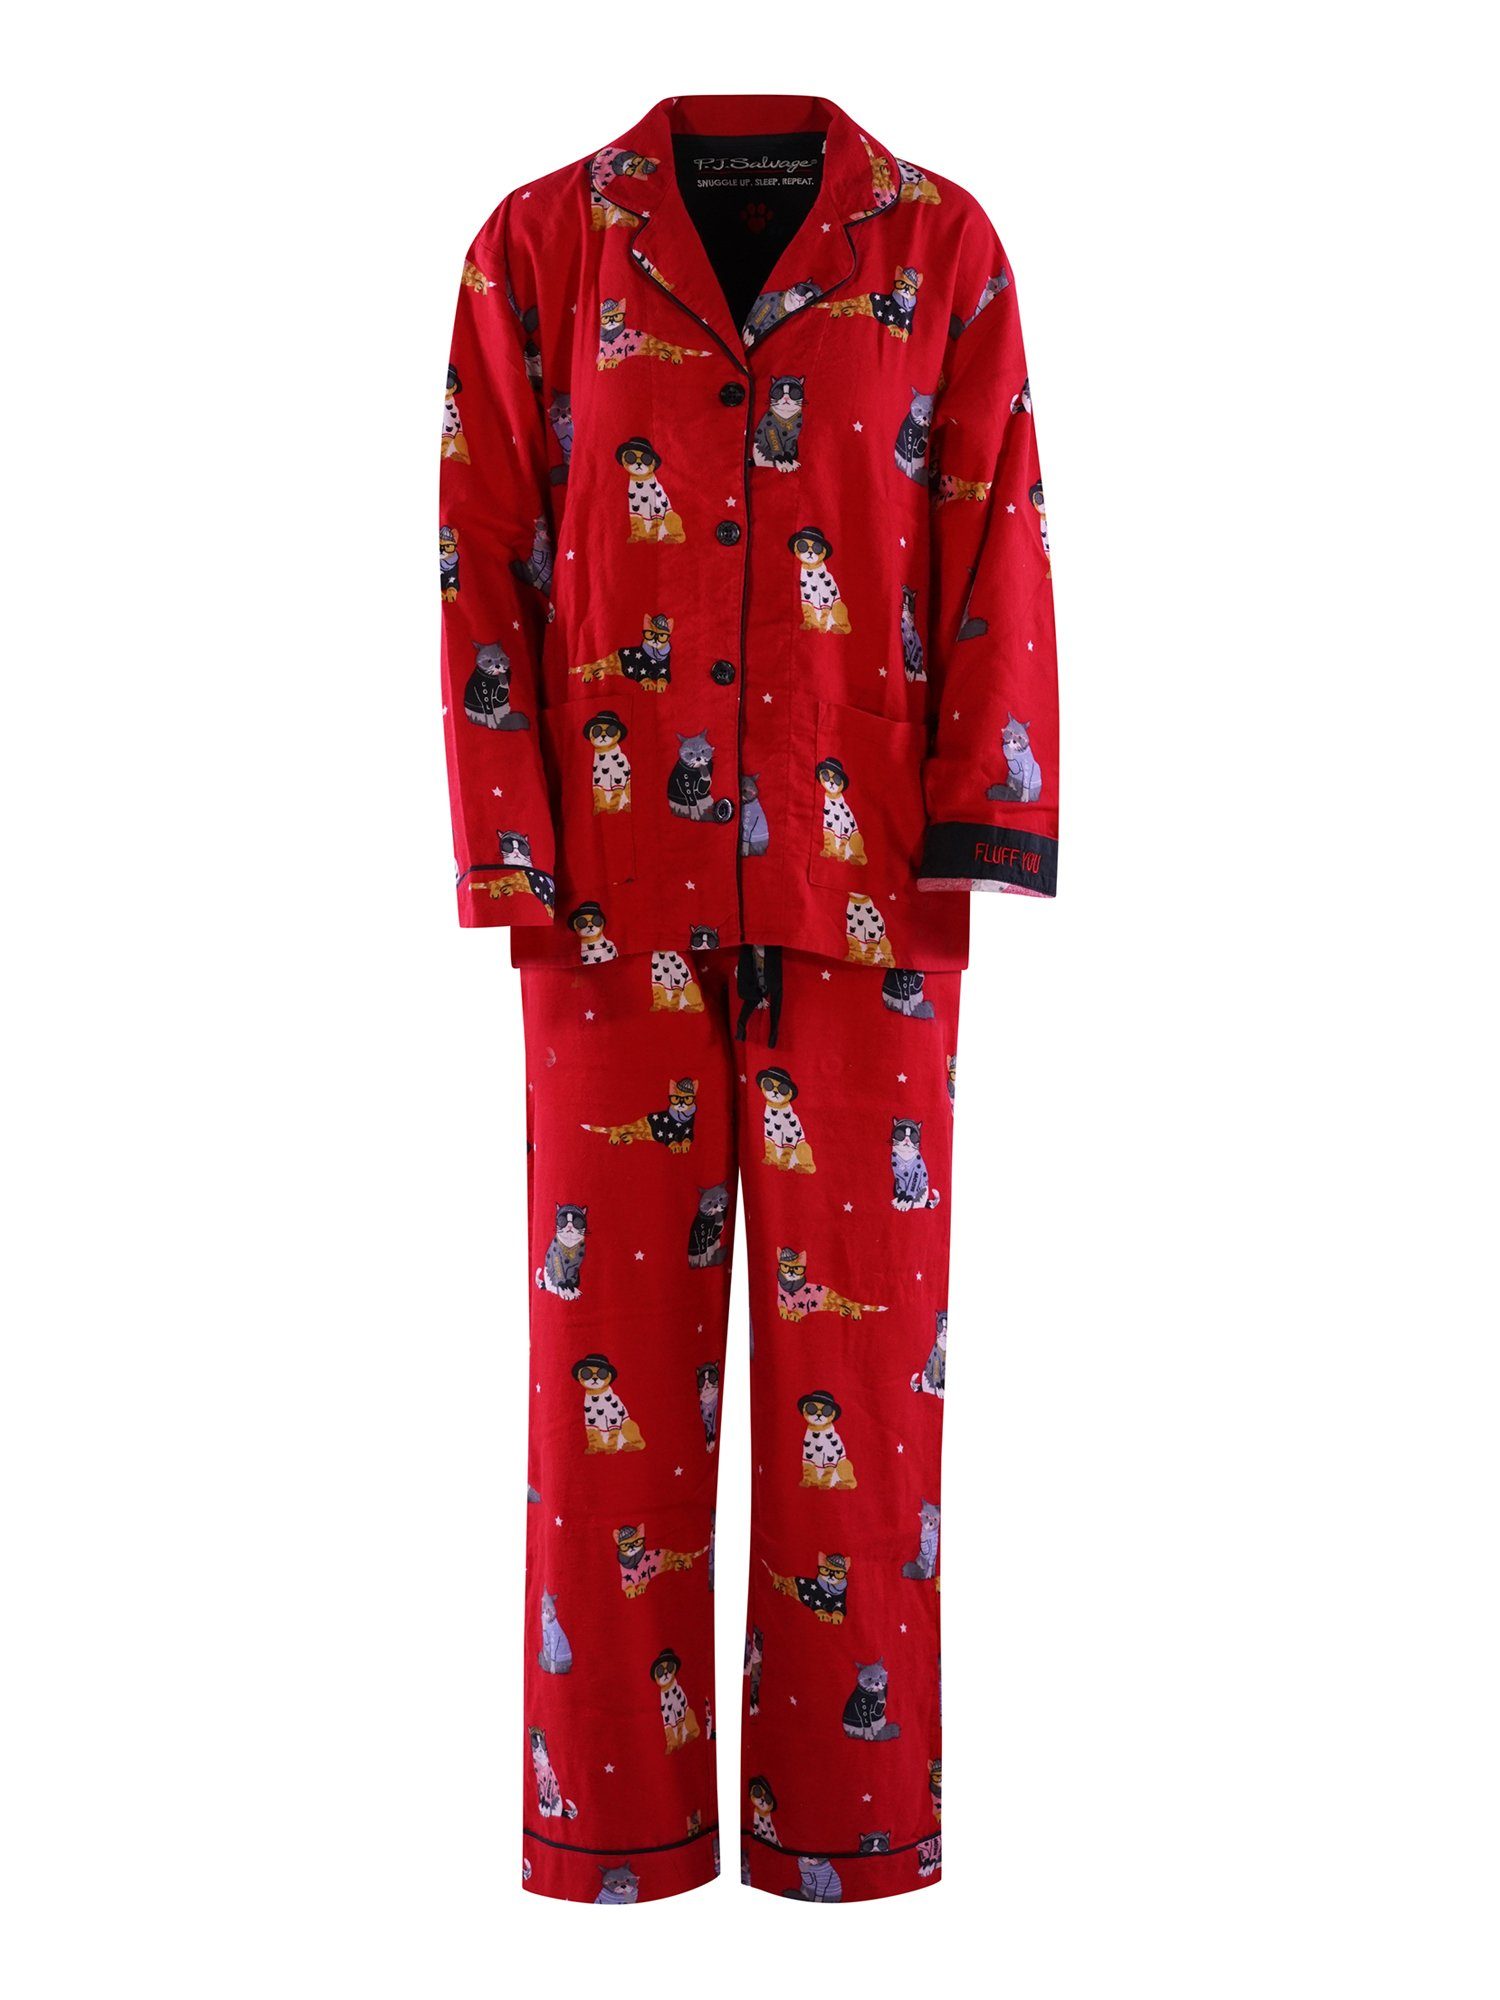 Salvage schlafmode Pyjama pyjama PJ rot Flanells schlafanzug